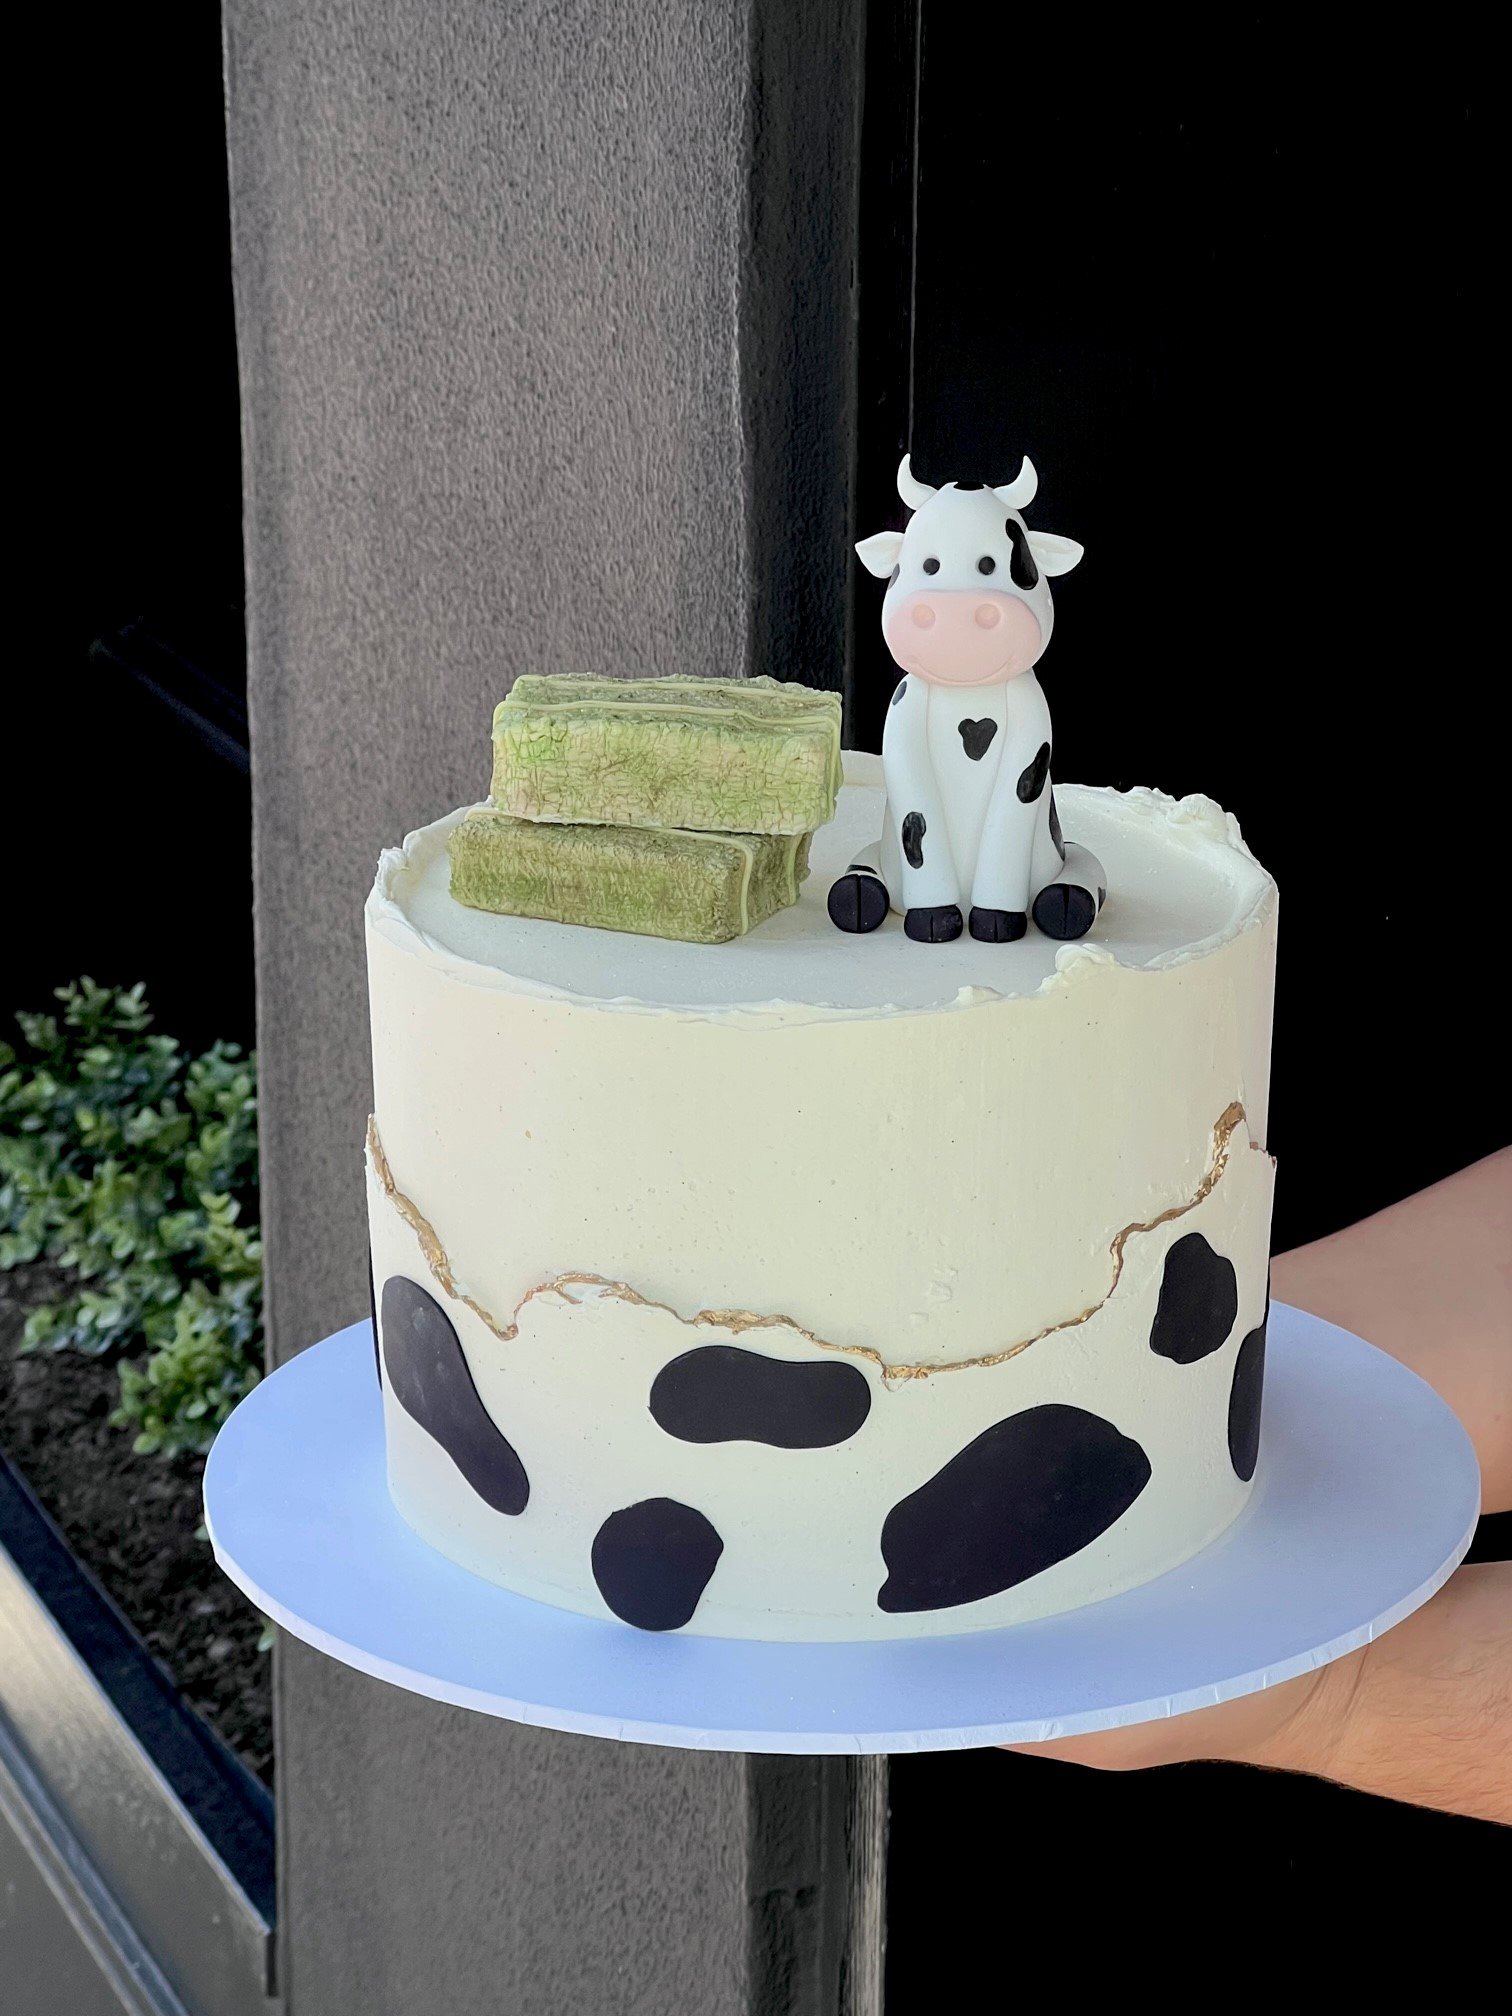 vanillapod-vanillapodspecialtycakes-bakery-celebrationcake-birthdaycake-kidscakes-cowcake.jpg